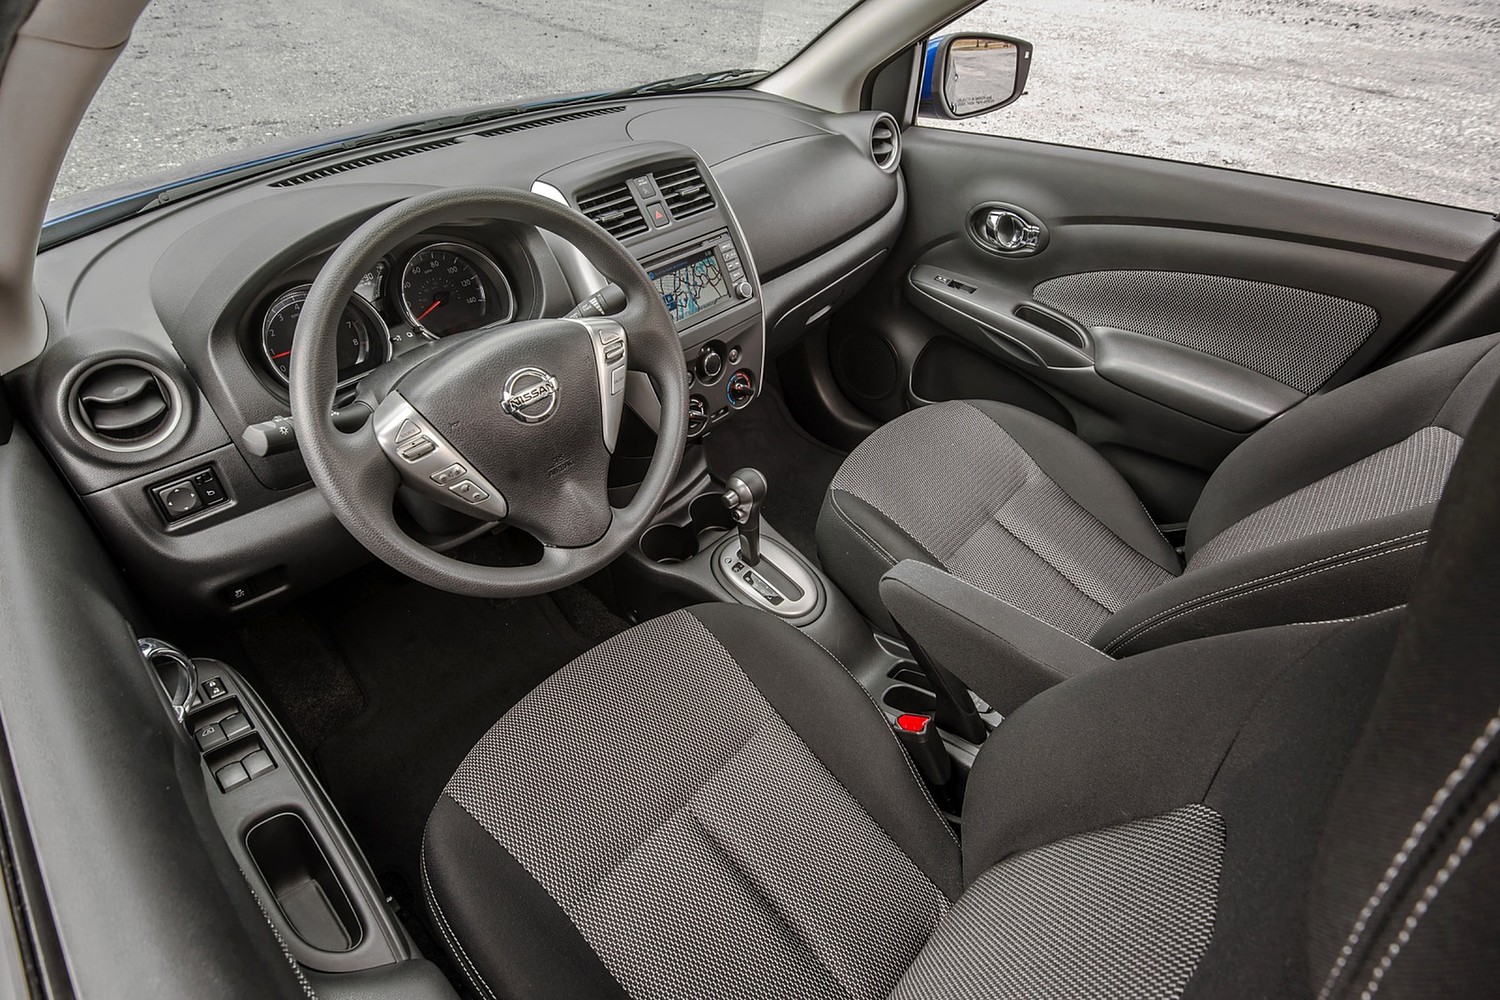 Nissan Versa 1.6 SL Sedan Interior (2015 model year shown)